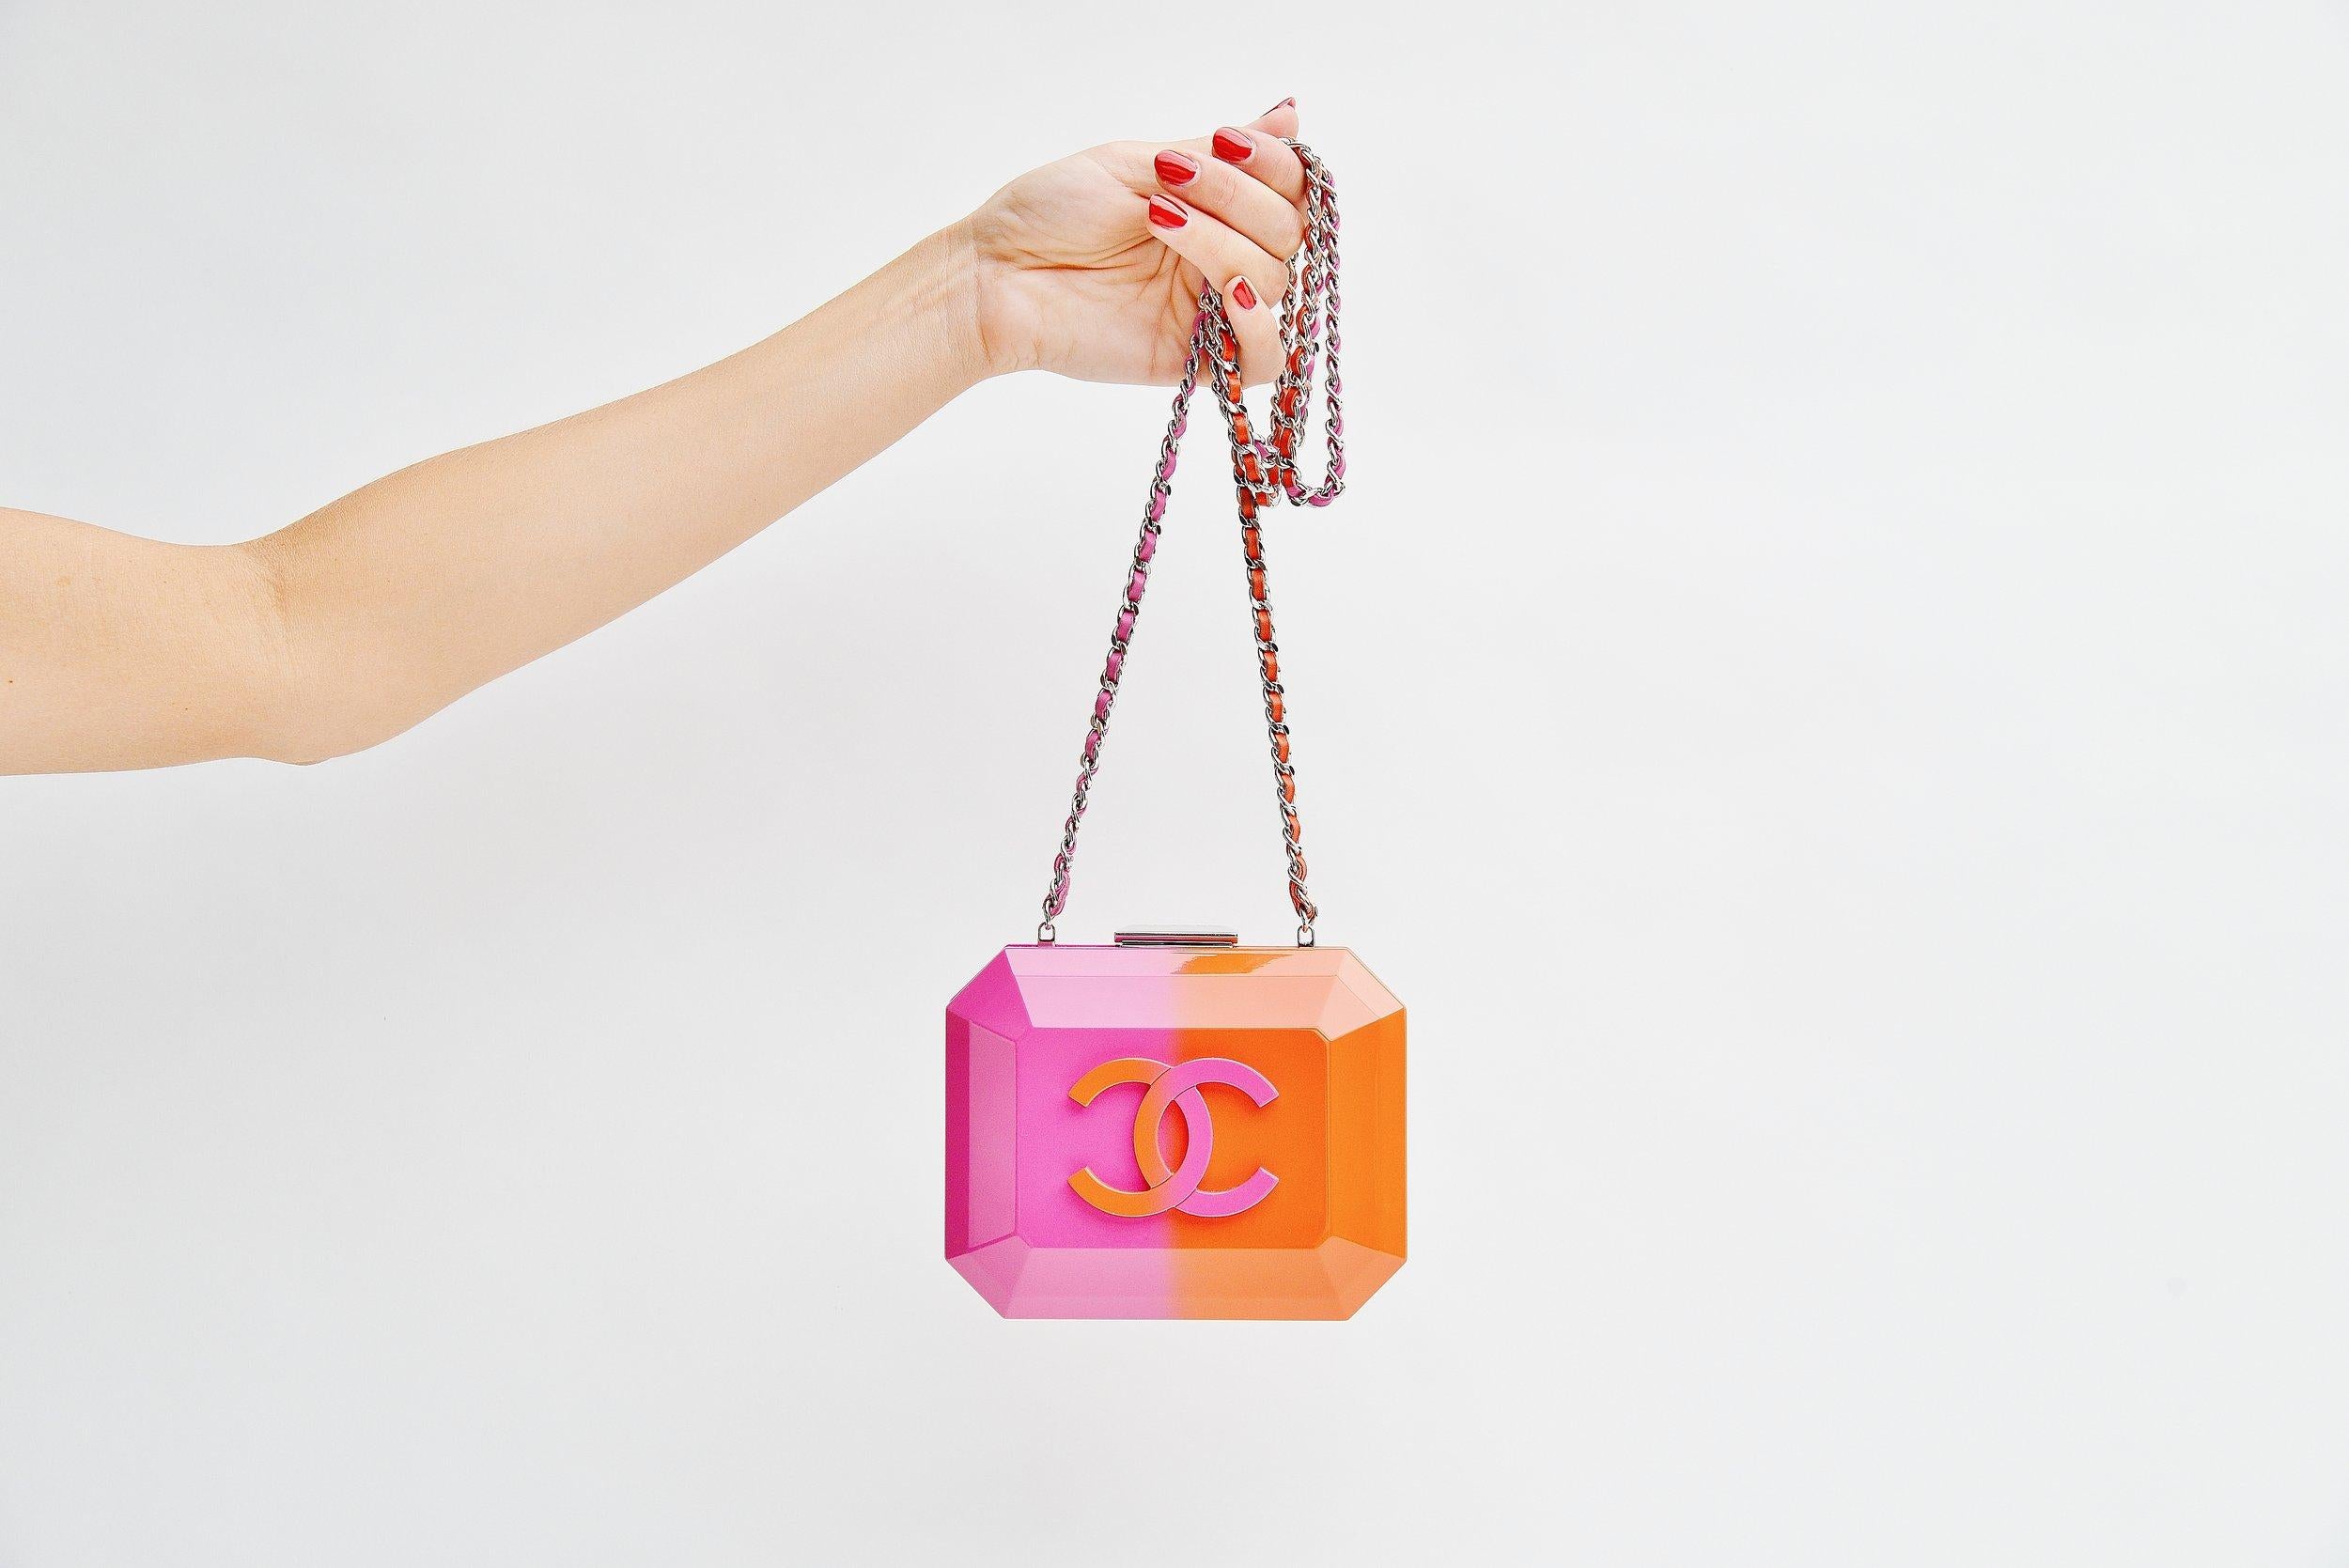 Chanel Runway Minaudière Ombre Pink & Orange Hard Shell Handbag Clutch 4